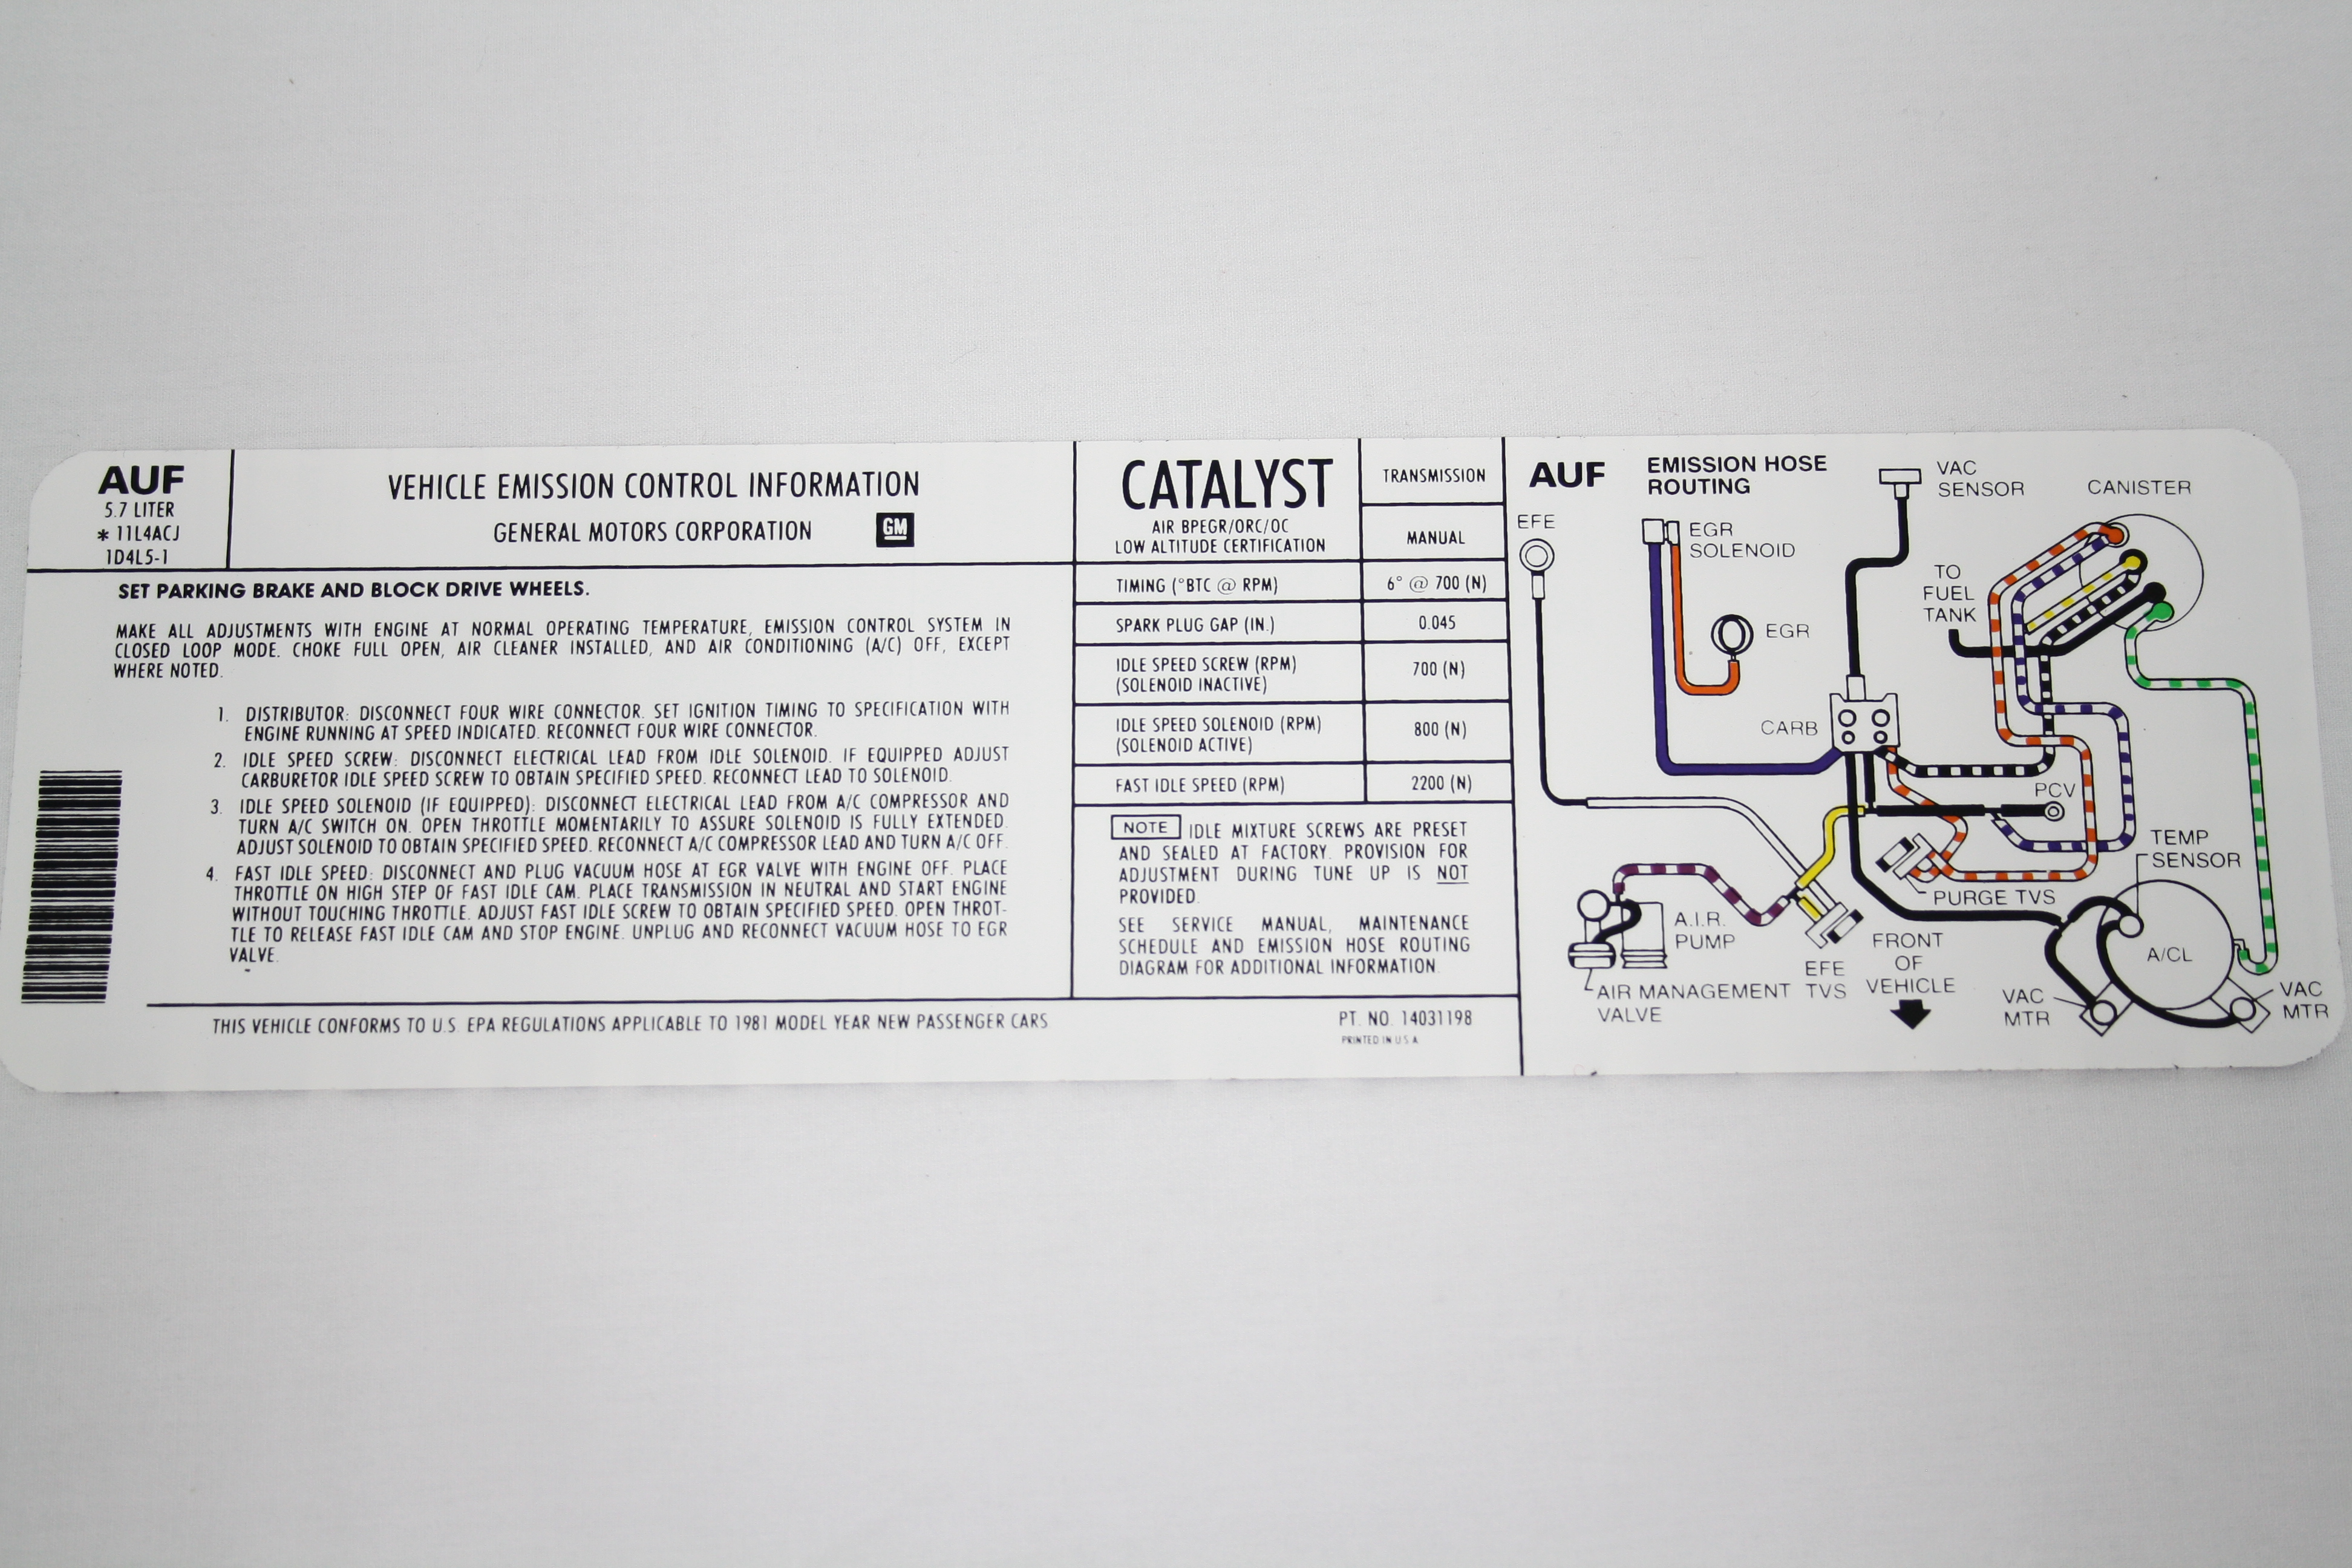 1981 Corvette Emission Decal 5.7 Manual Transmission